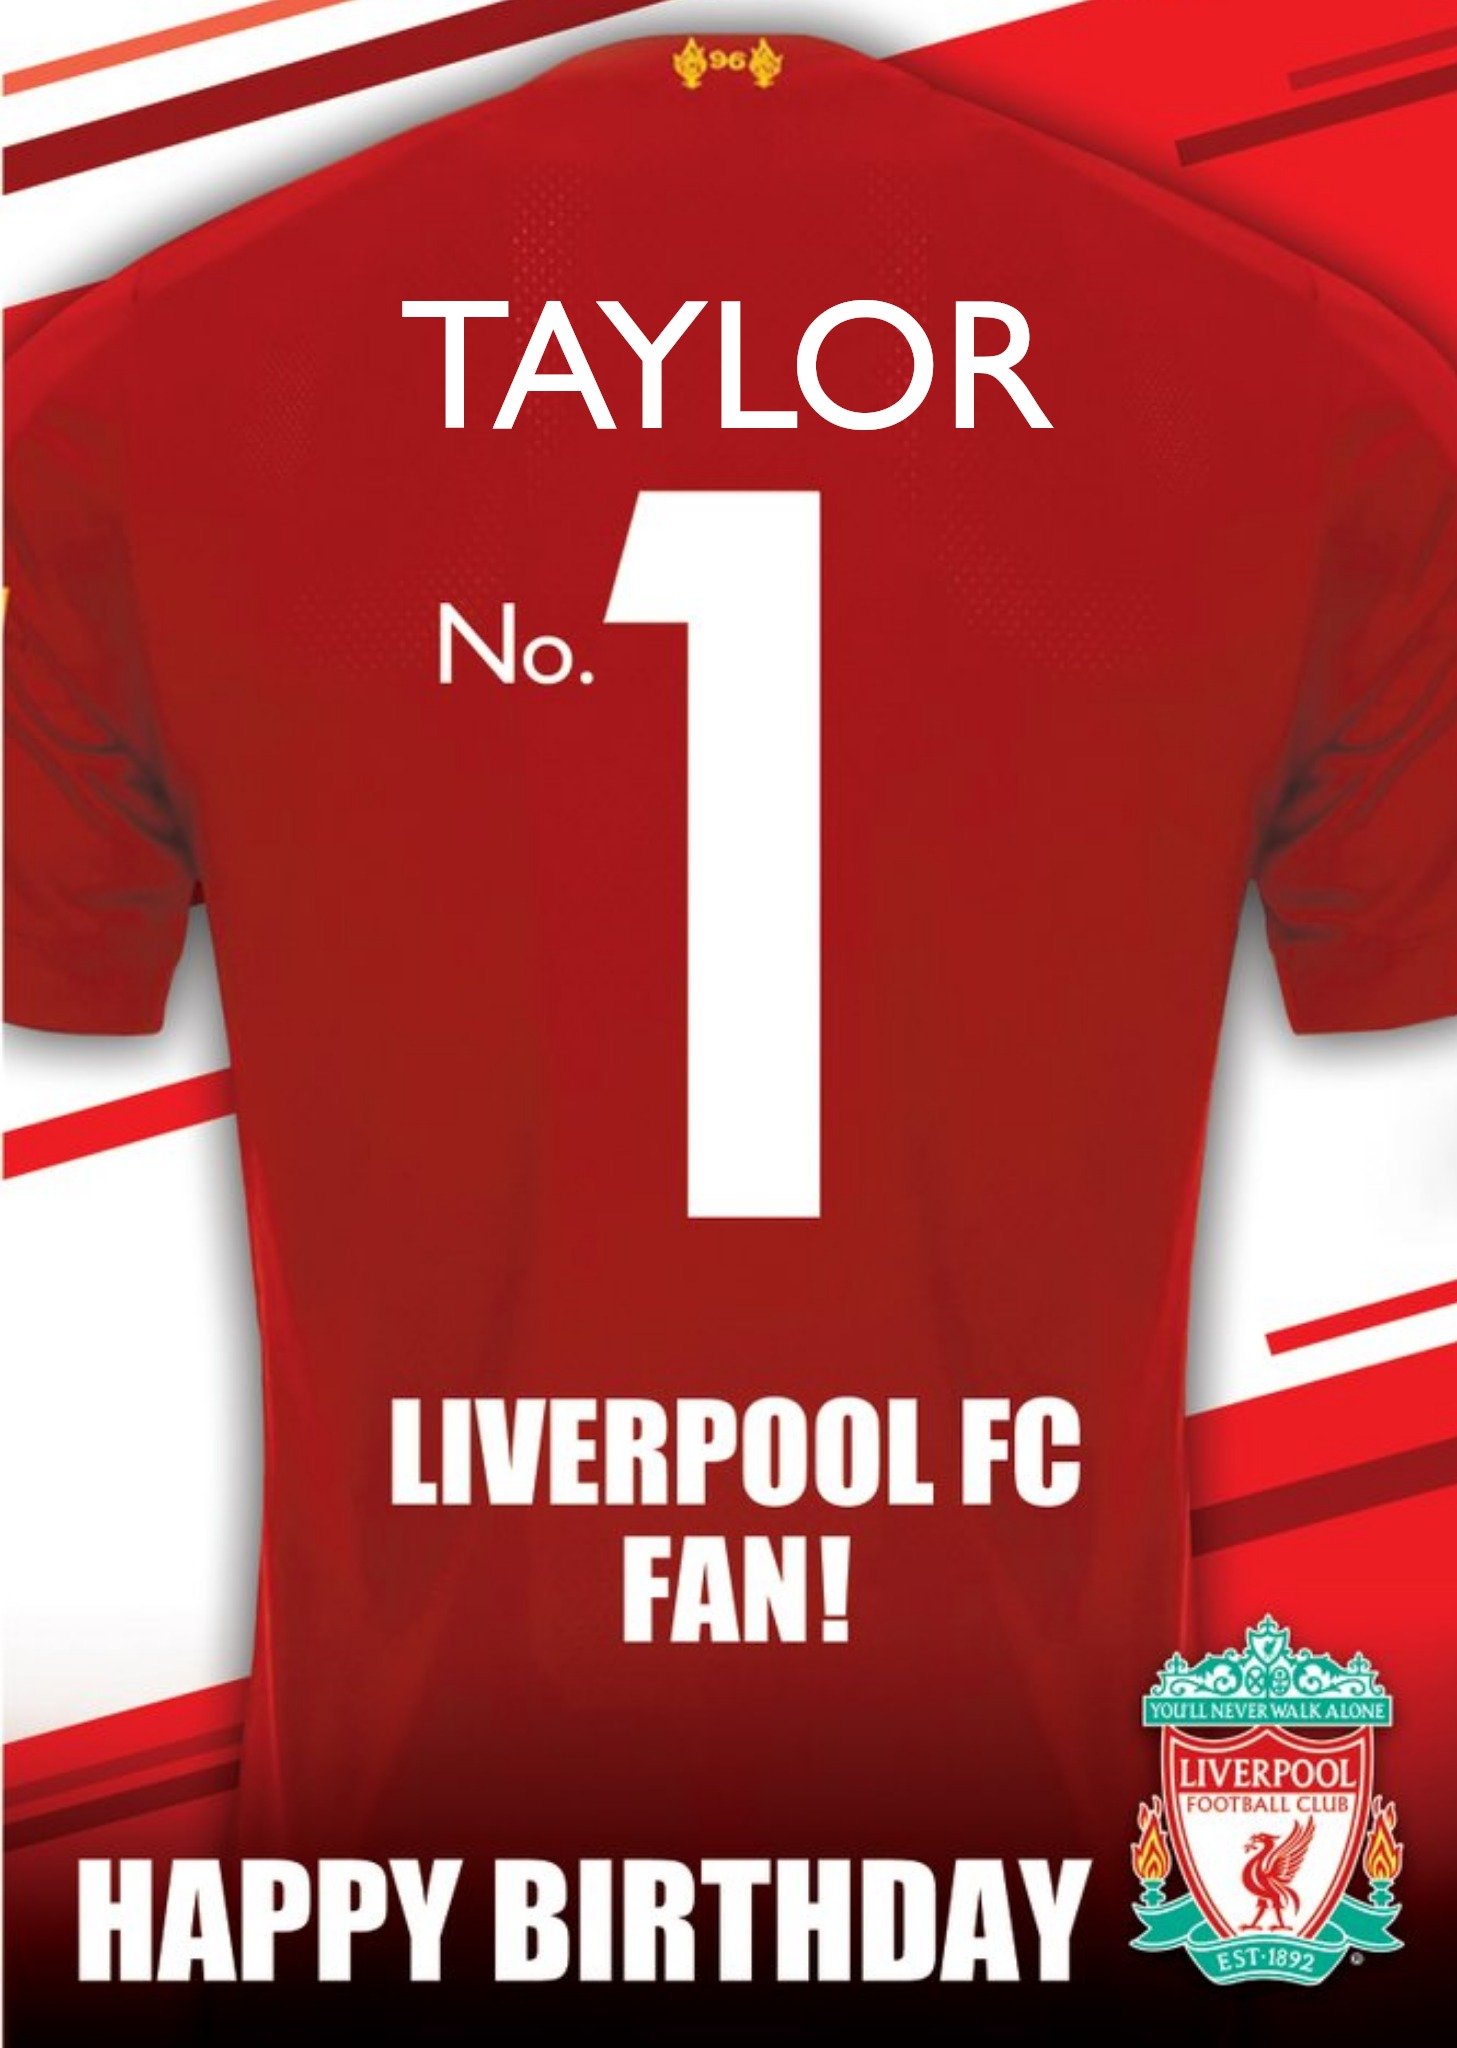 Liverpool Fc Football Club No.1 Fan Football Shirt Birthday Card, Large